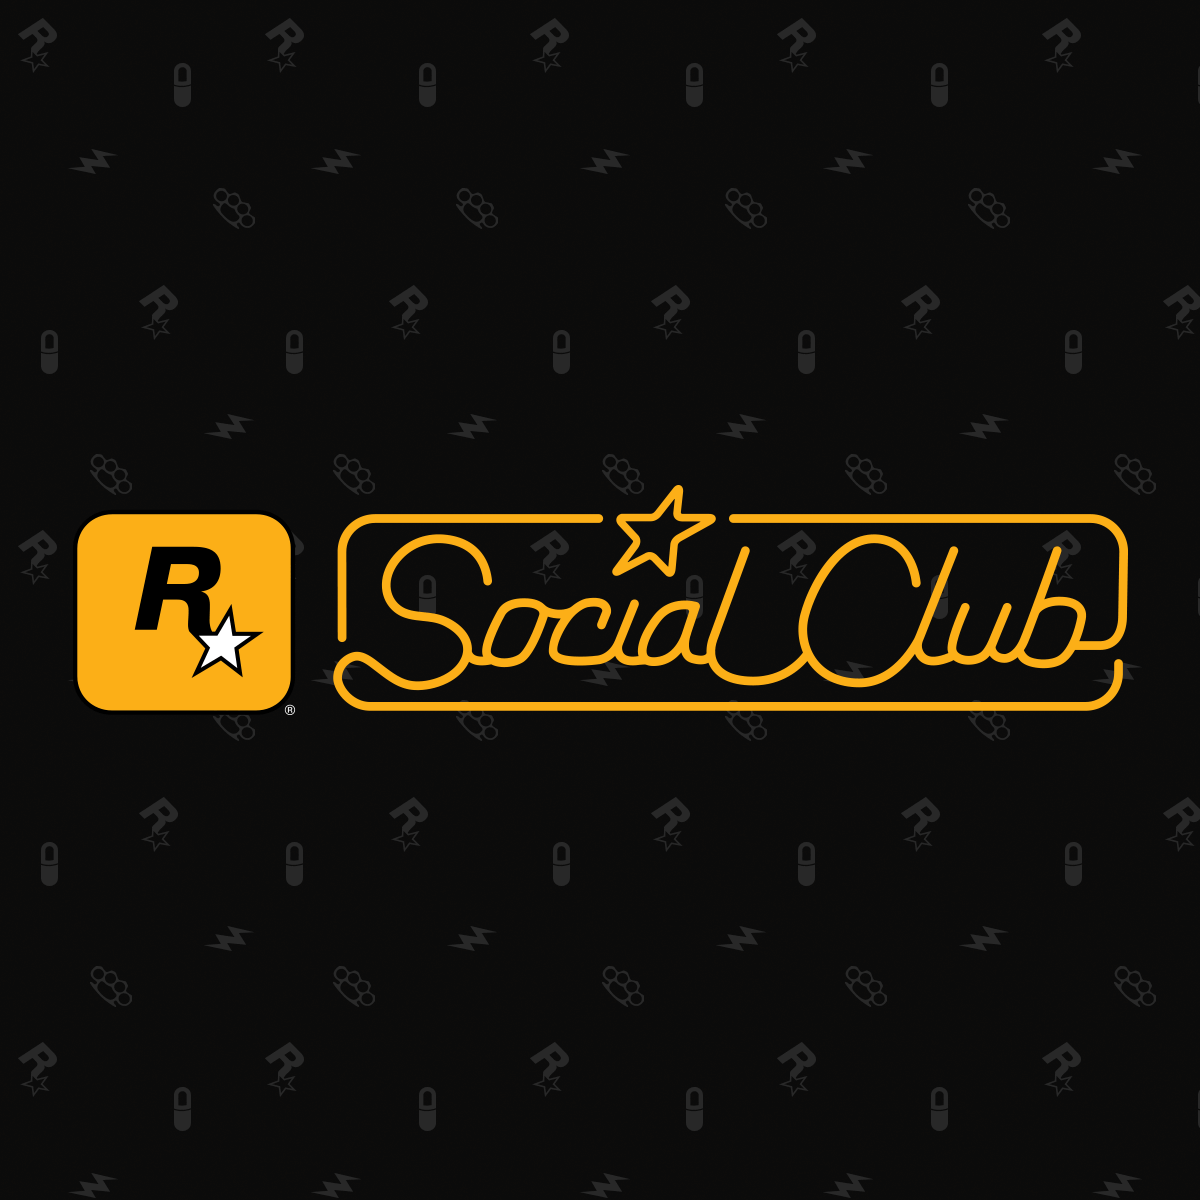 Rockstar games вход. Social Club. Рокстар социал клаб. Social Club игры. Social Club логотип.